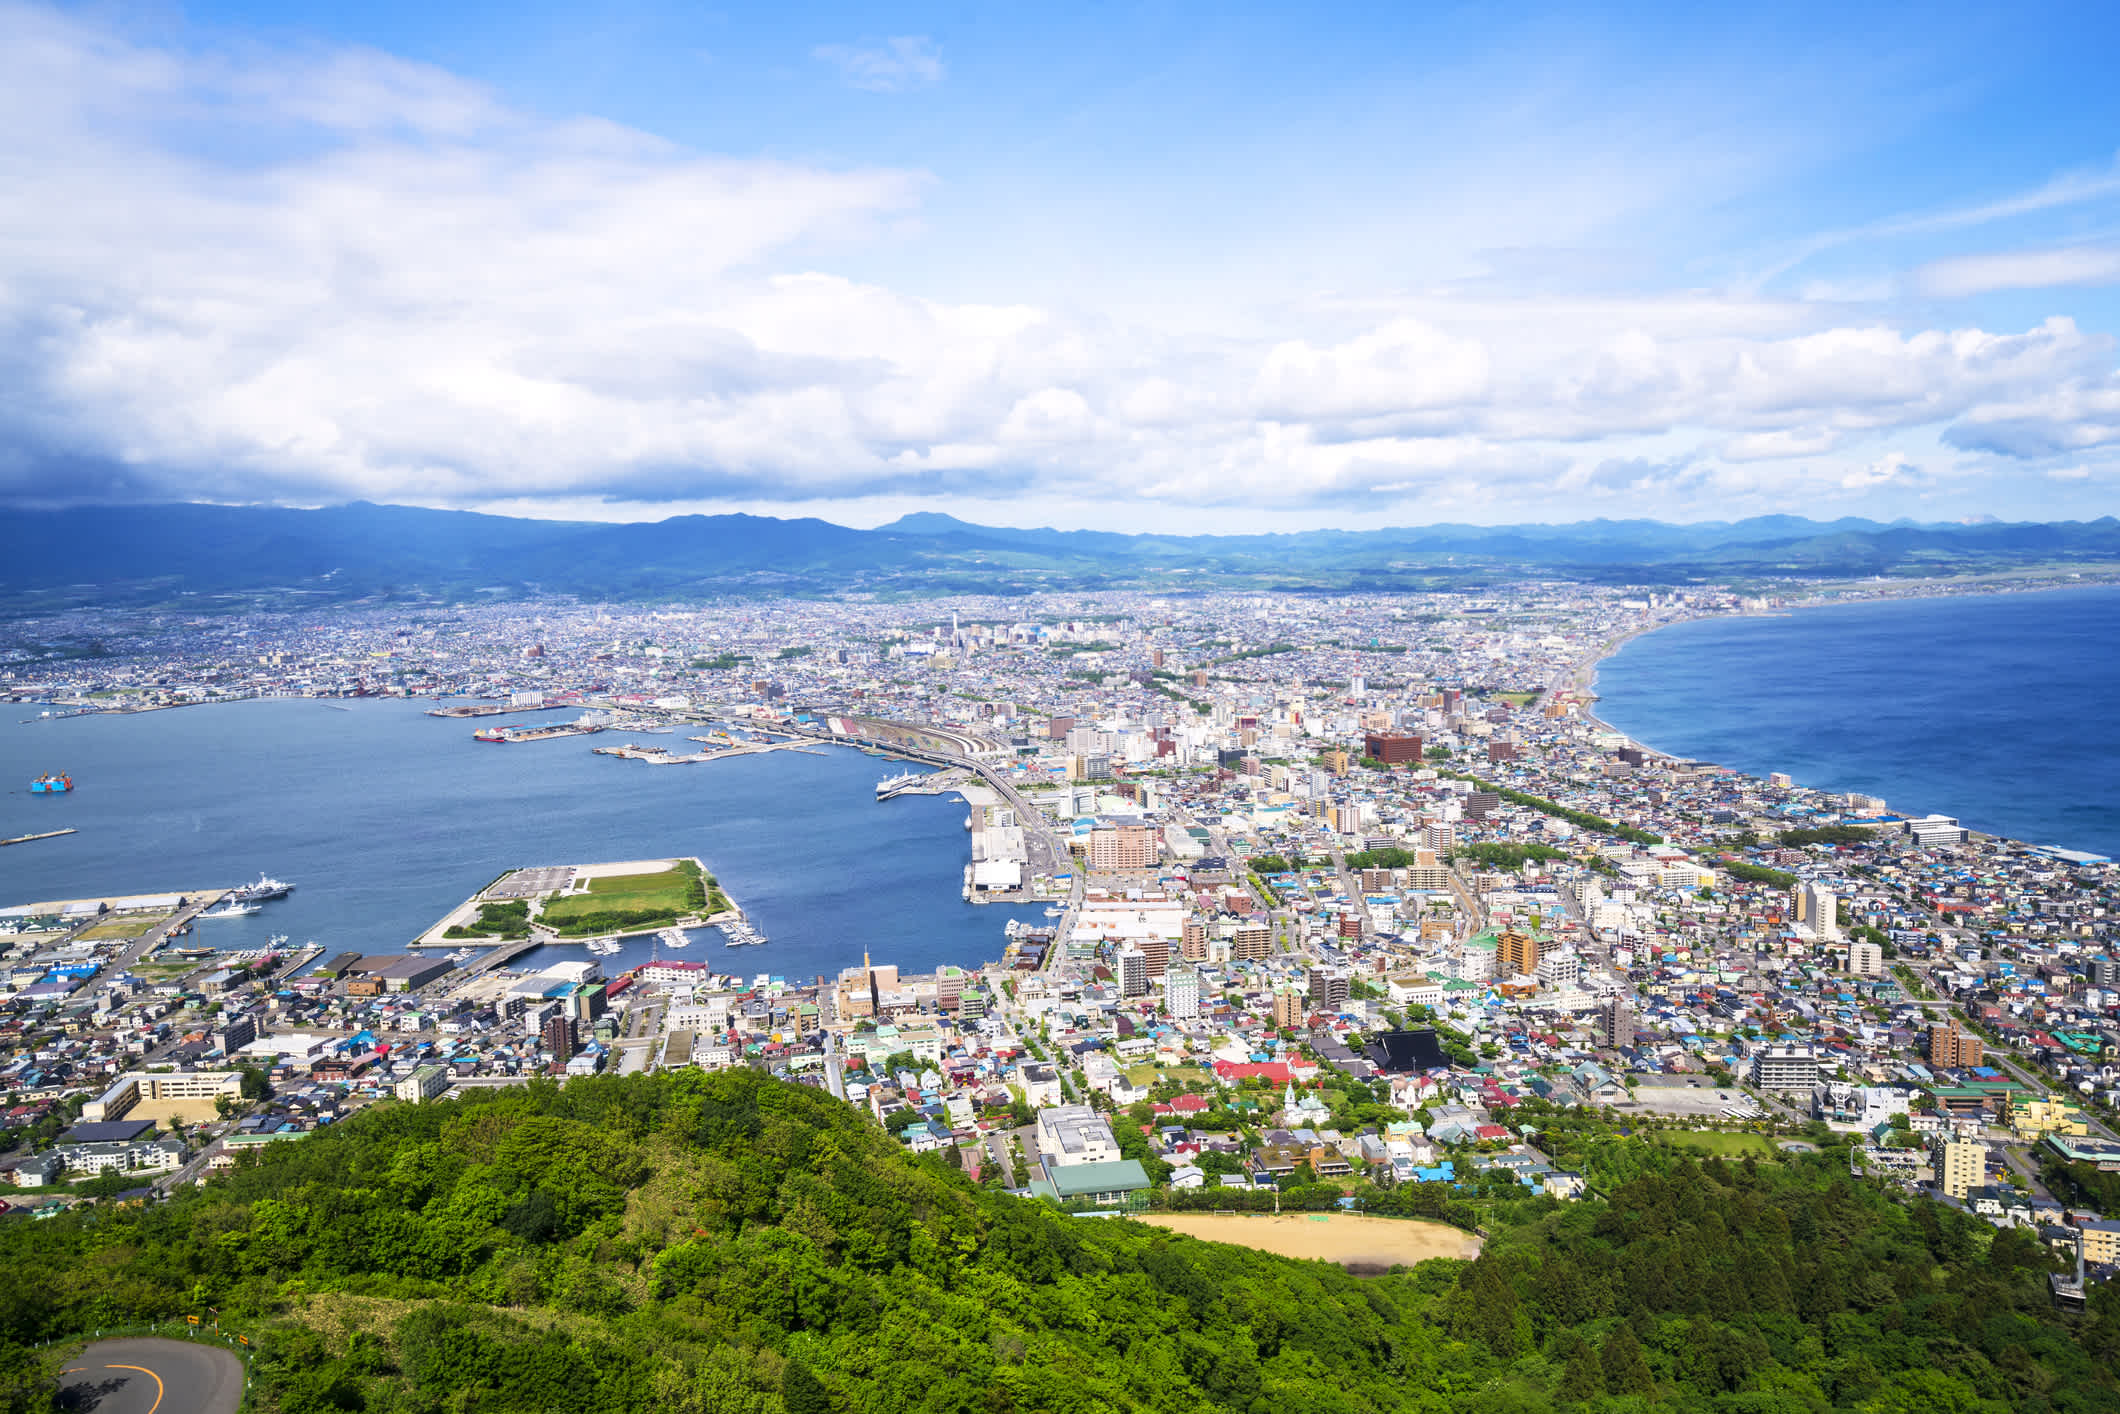 Panorama depuis le mont Hakodate, Hokkaido, Japon.

